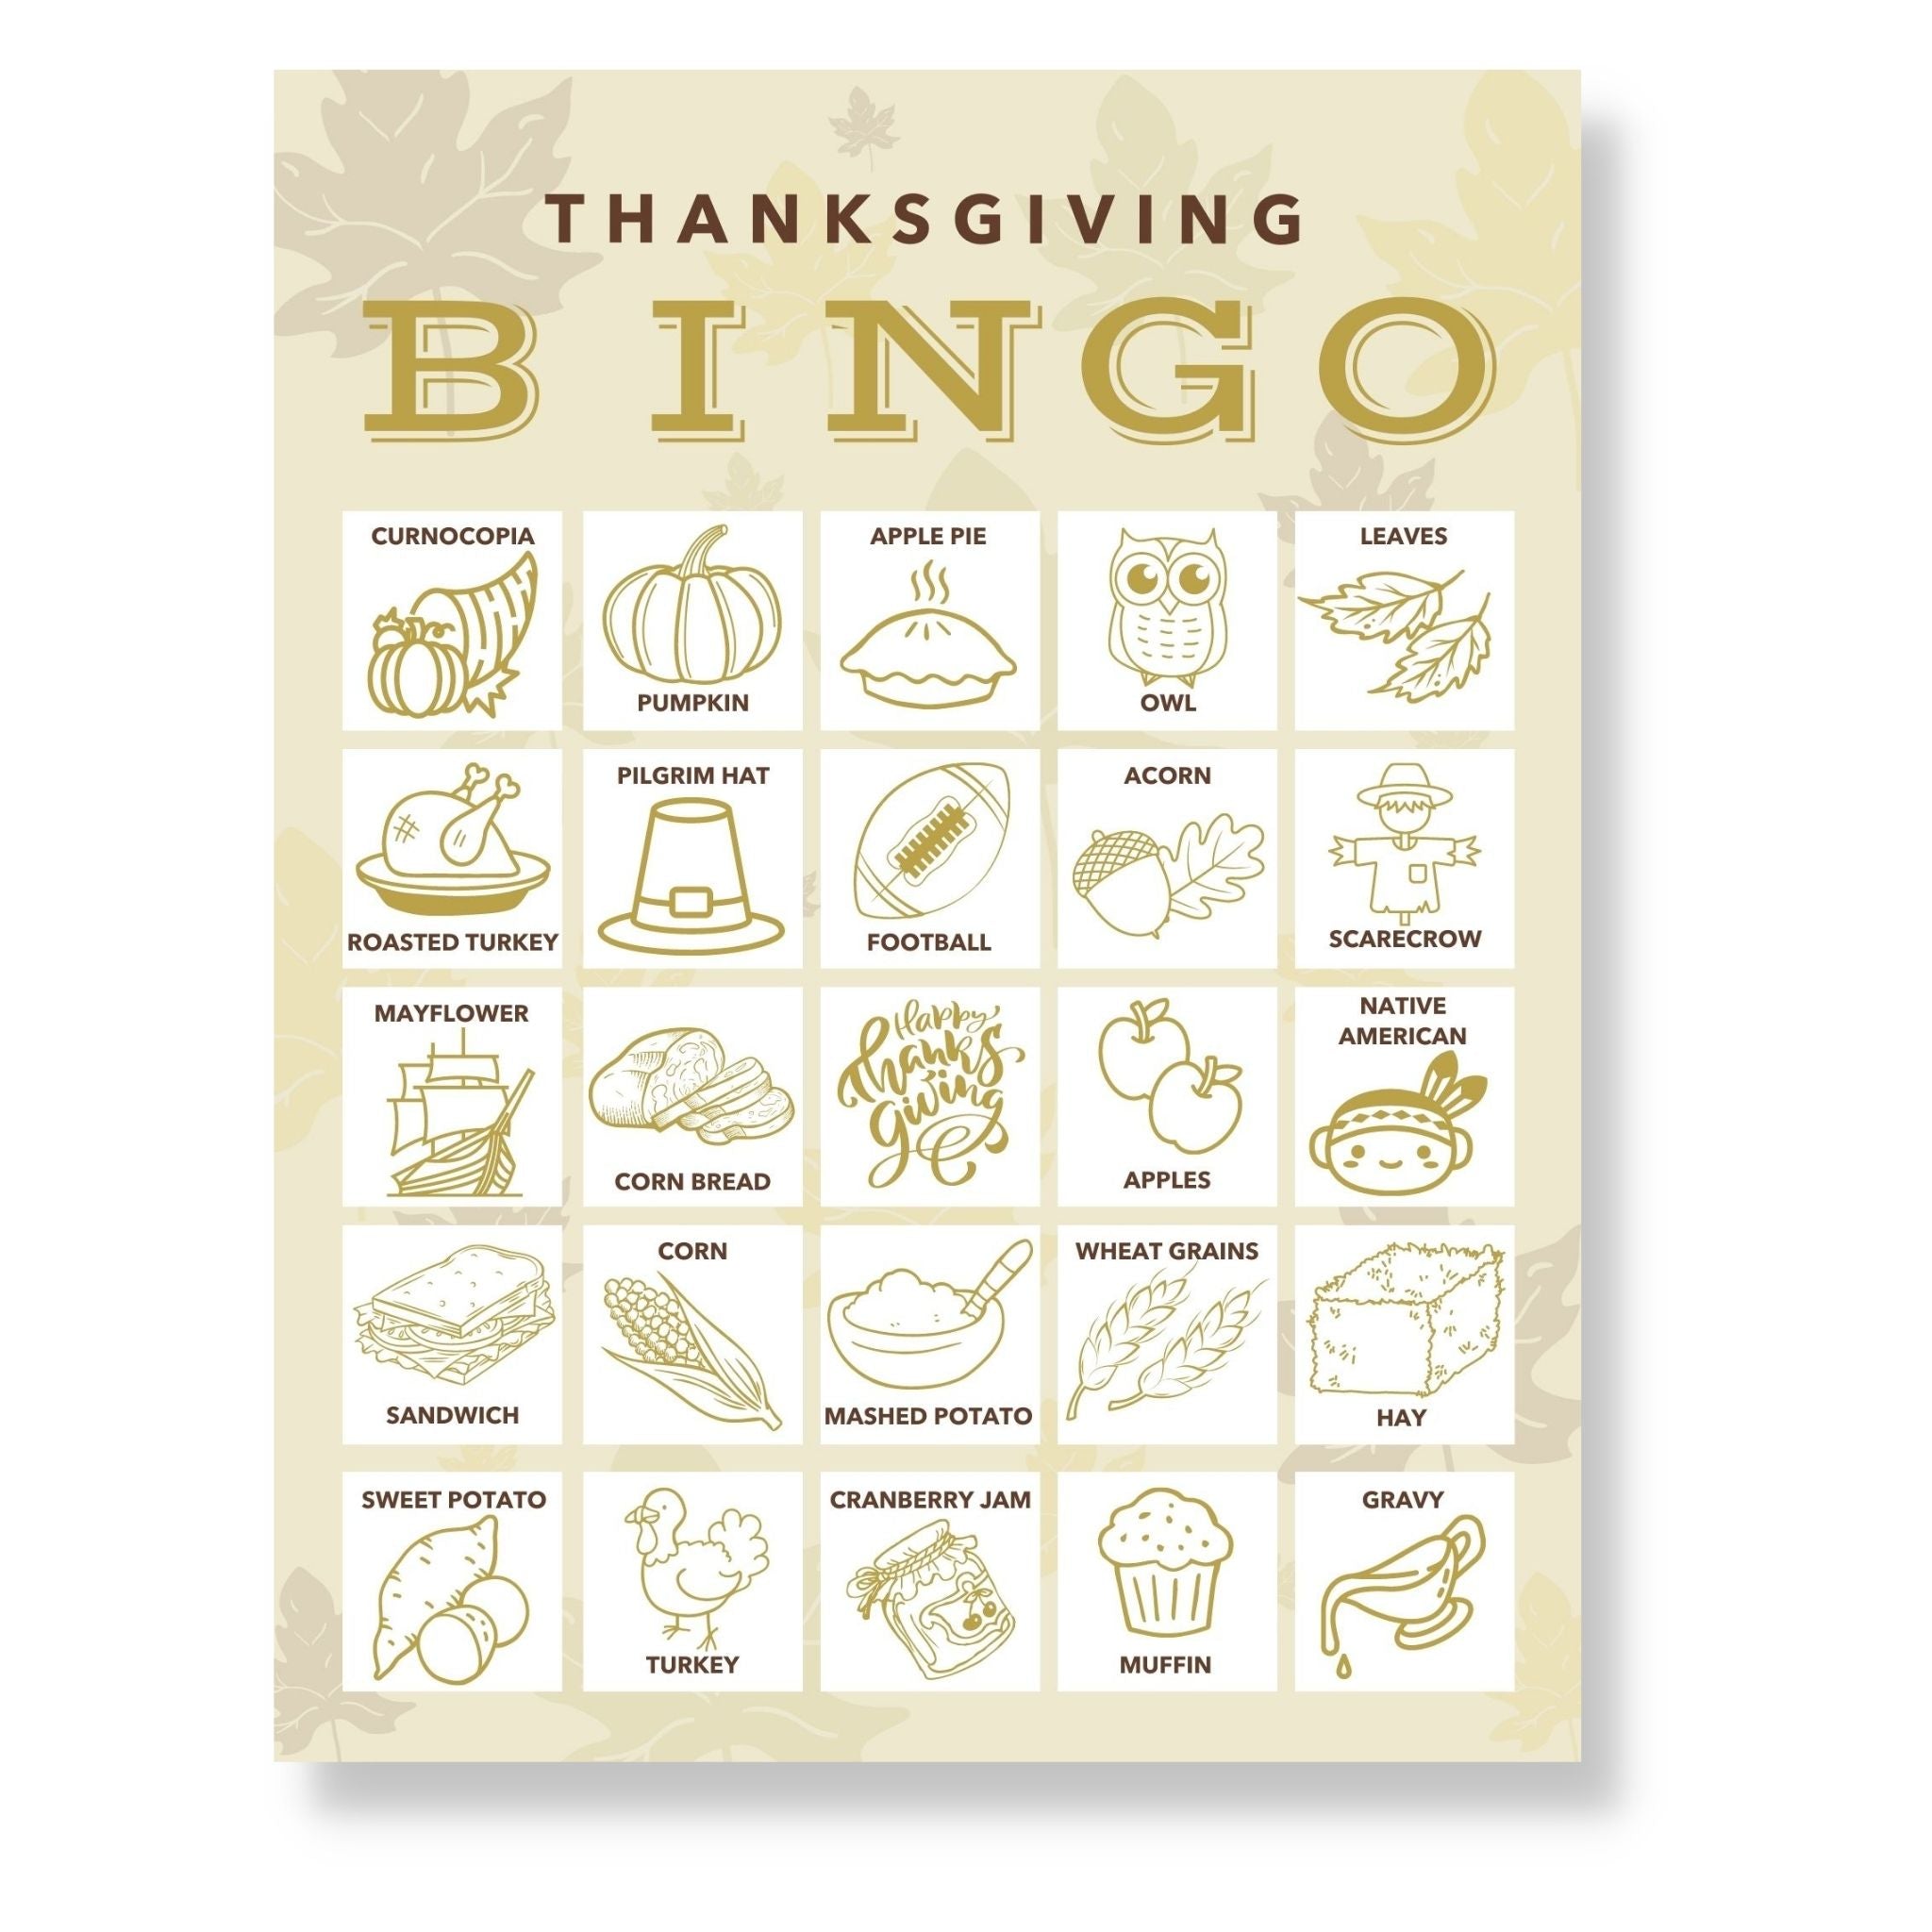 Thanksgiving Bingo Cards (Printable)